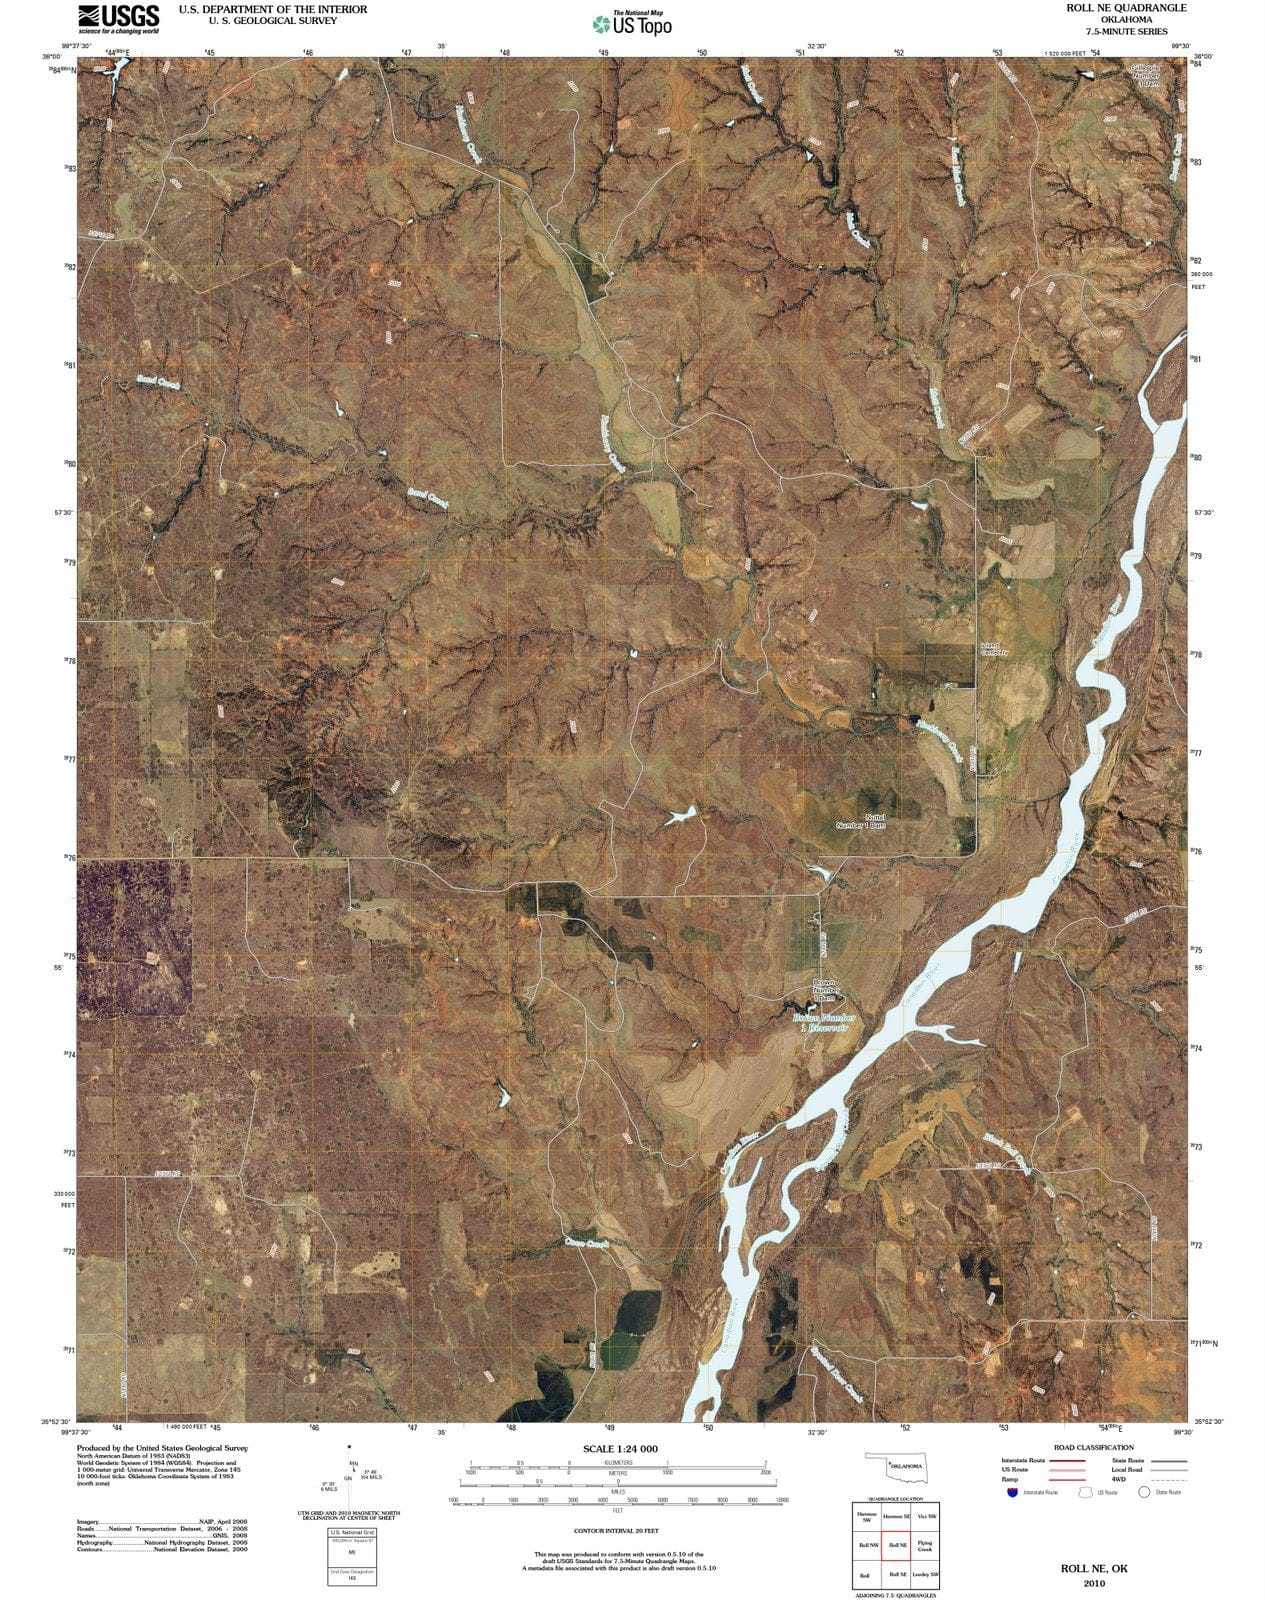 2010 Roll, OK - Oklahoma - USGS Topographic Map